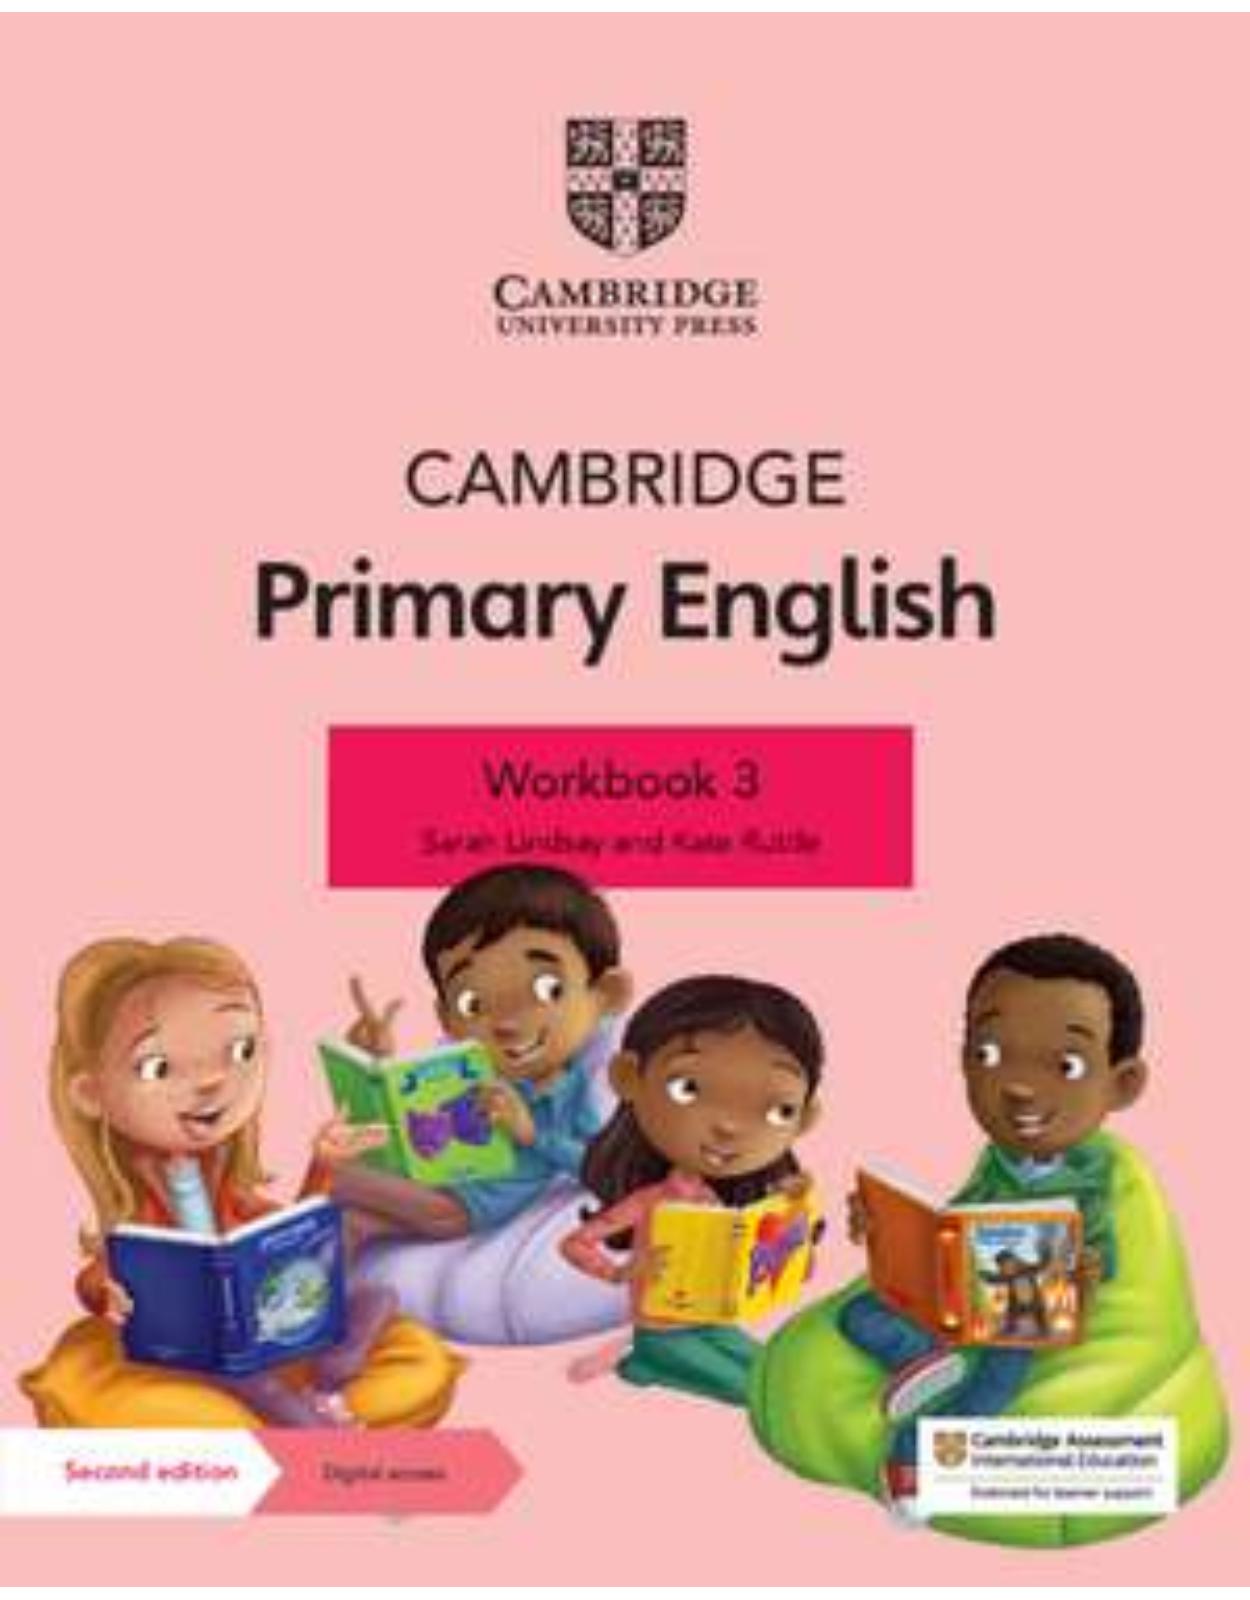 Cambridge Primary English Workbook 3 with Digital Access 